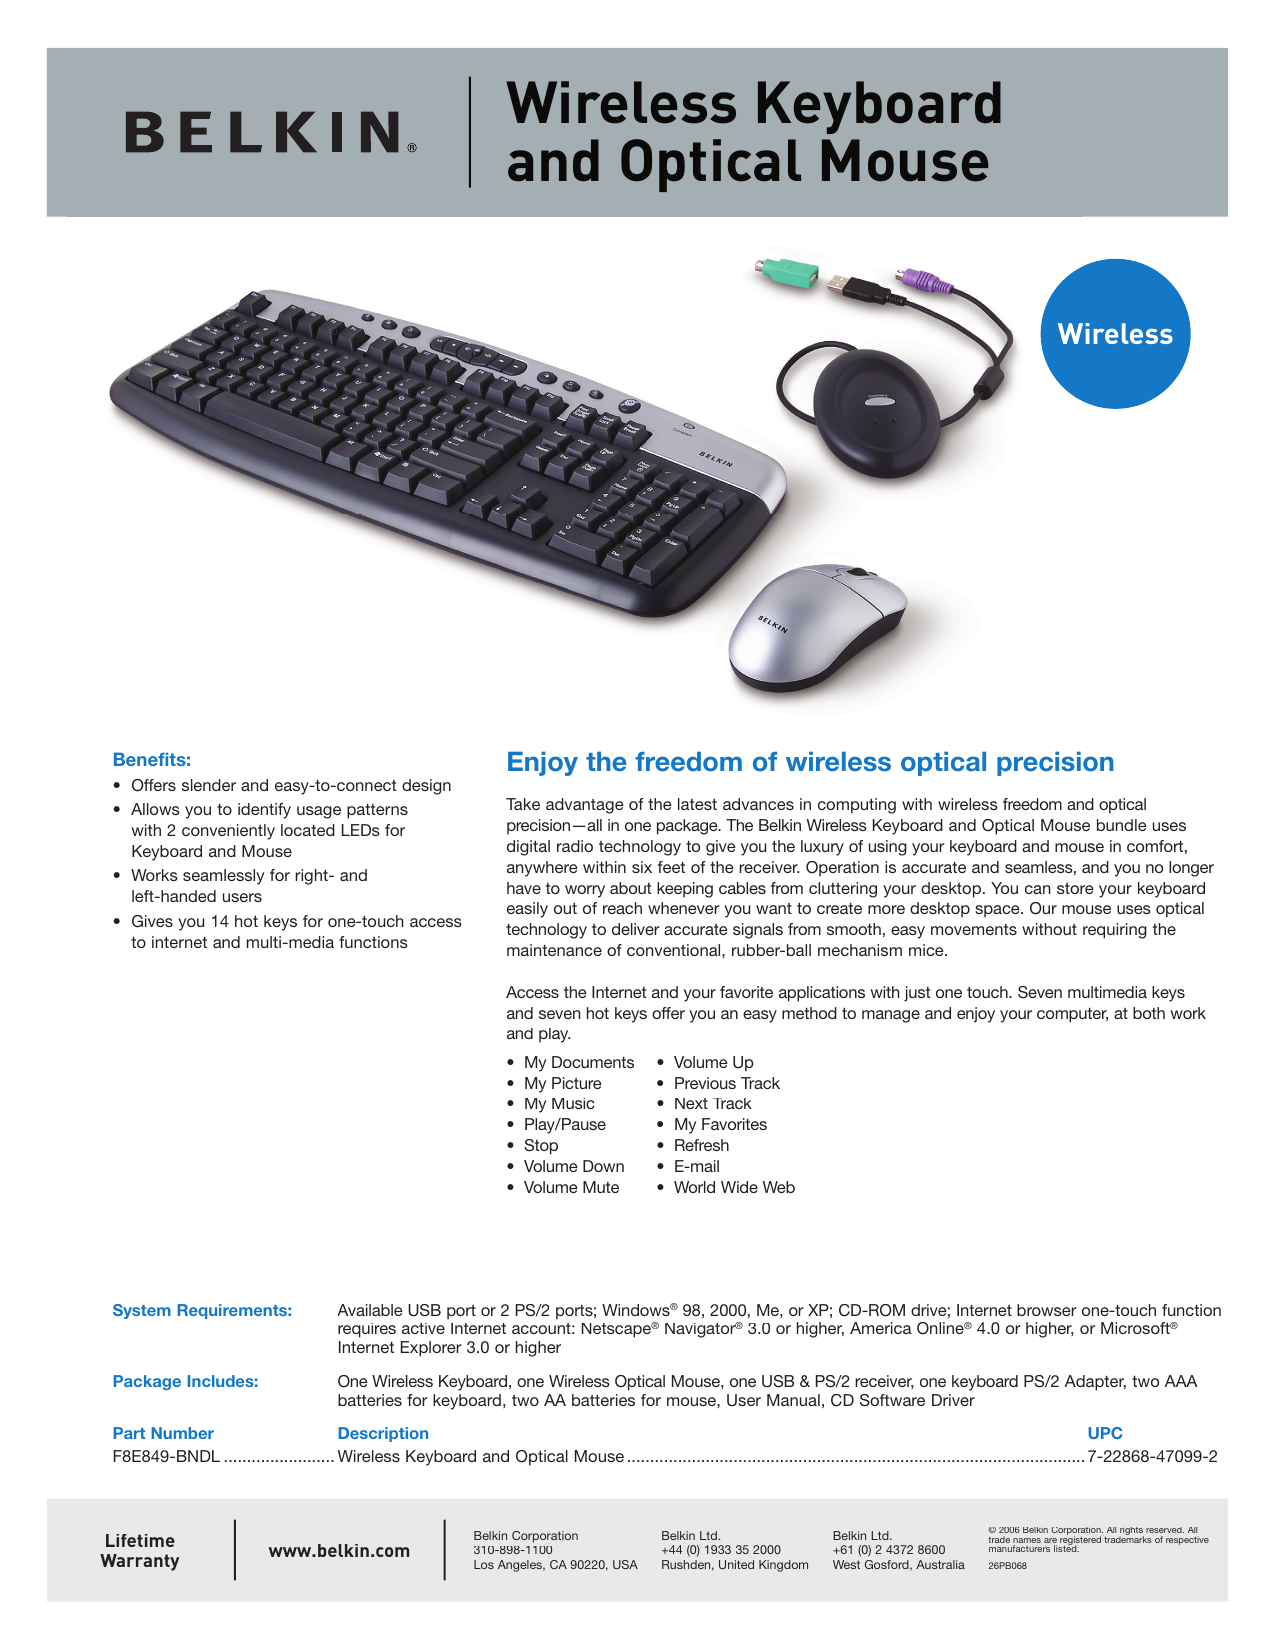 microsoft wireless keyboard 2000 manual